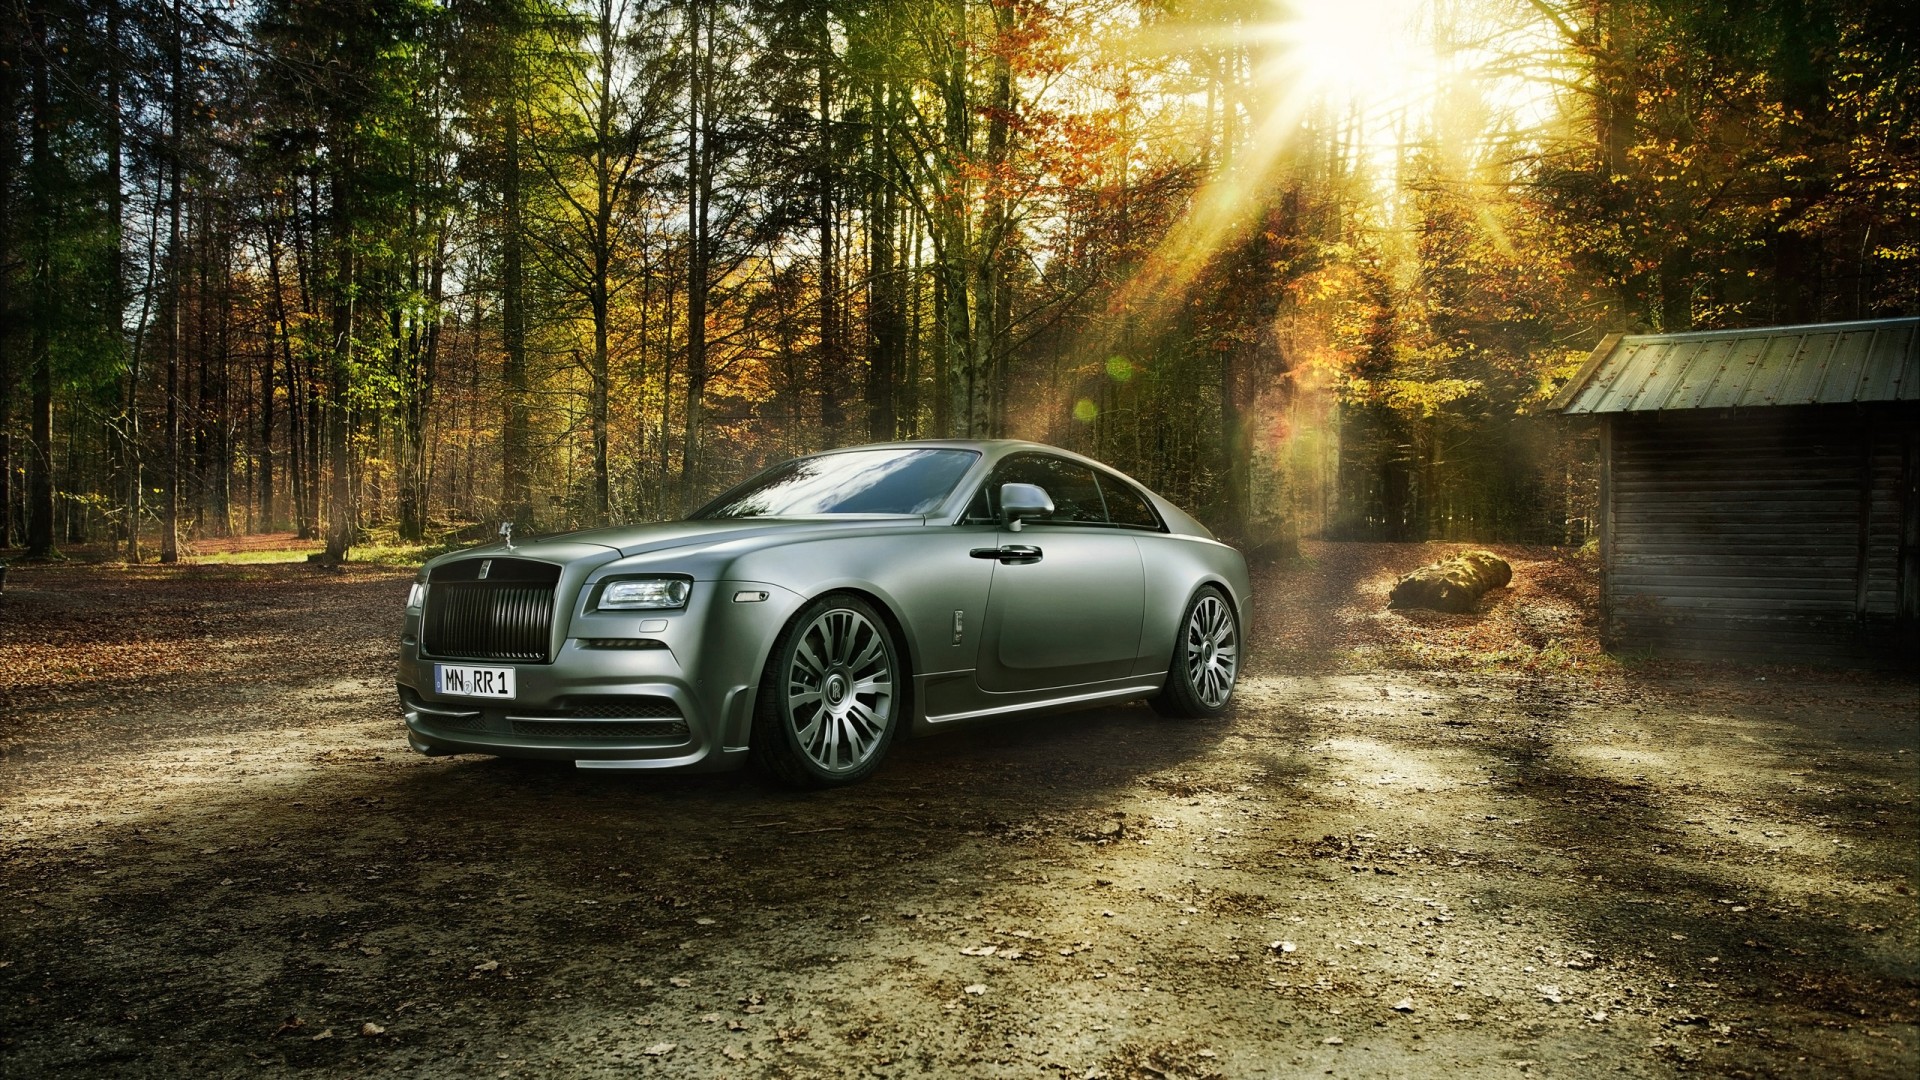 2014 Spofec Rolls Royce Wraith 2 Wallpaper | HD Car Wallpapers | ID #4987